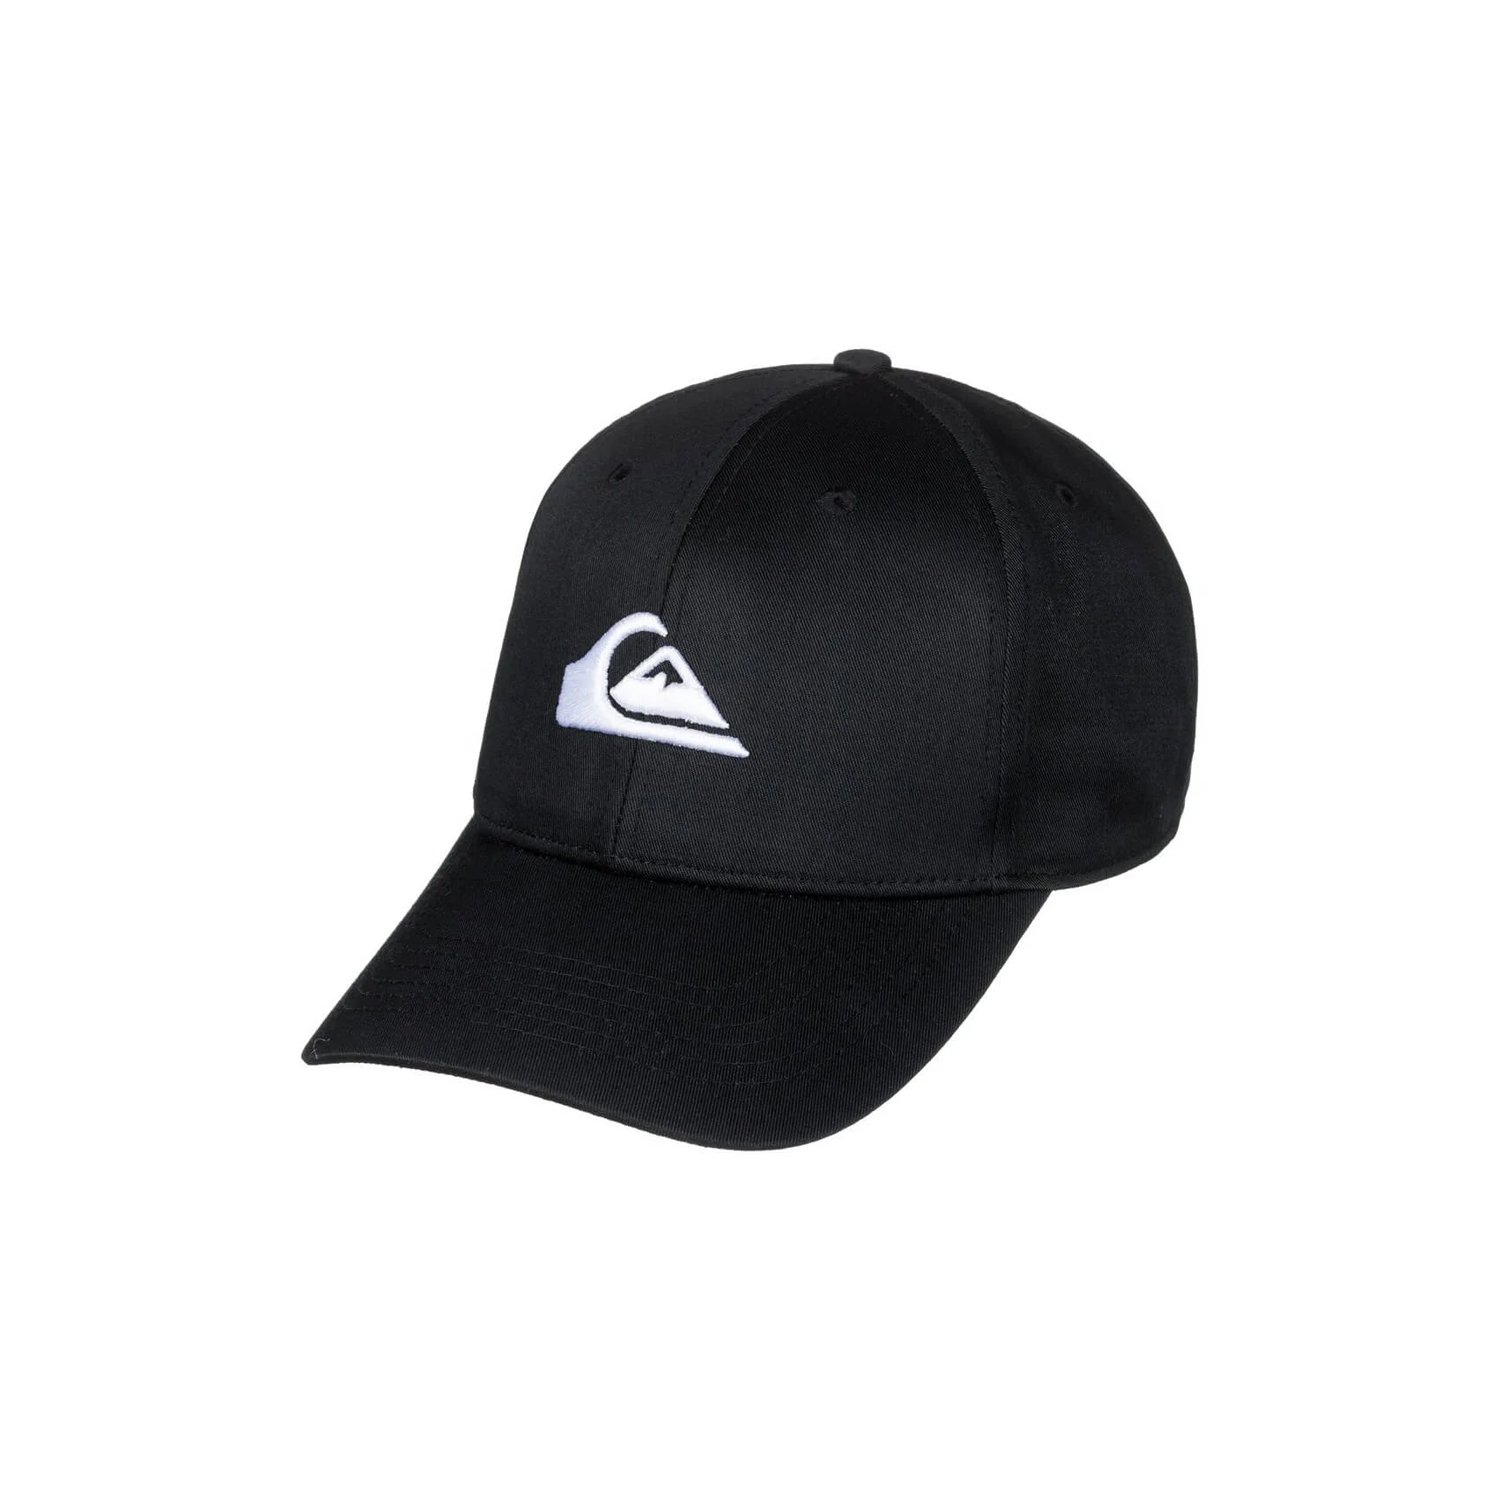 Quiksilver Decades Şapka - Siyah - 1